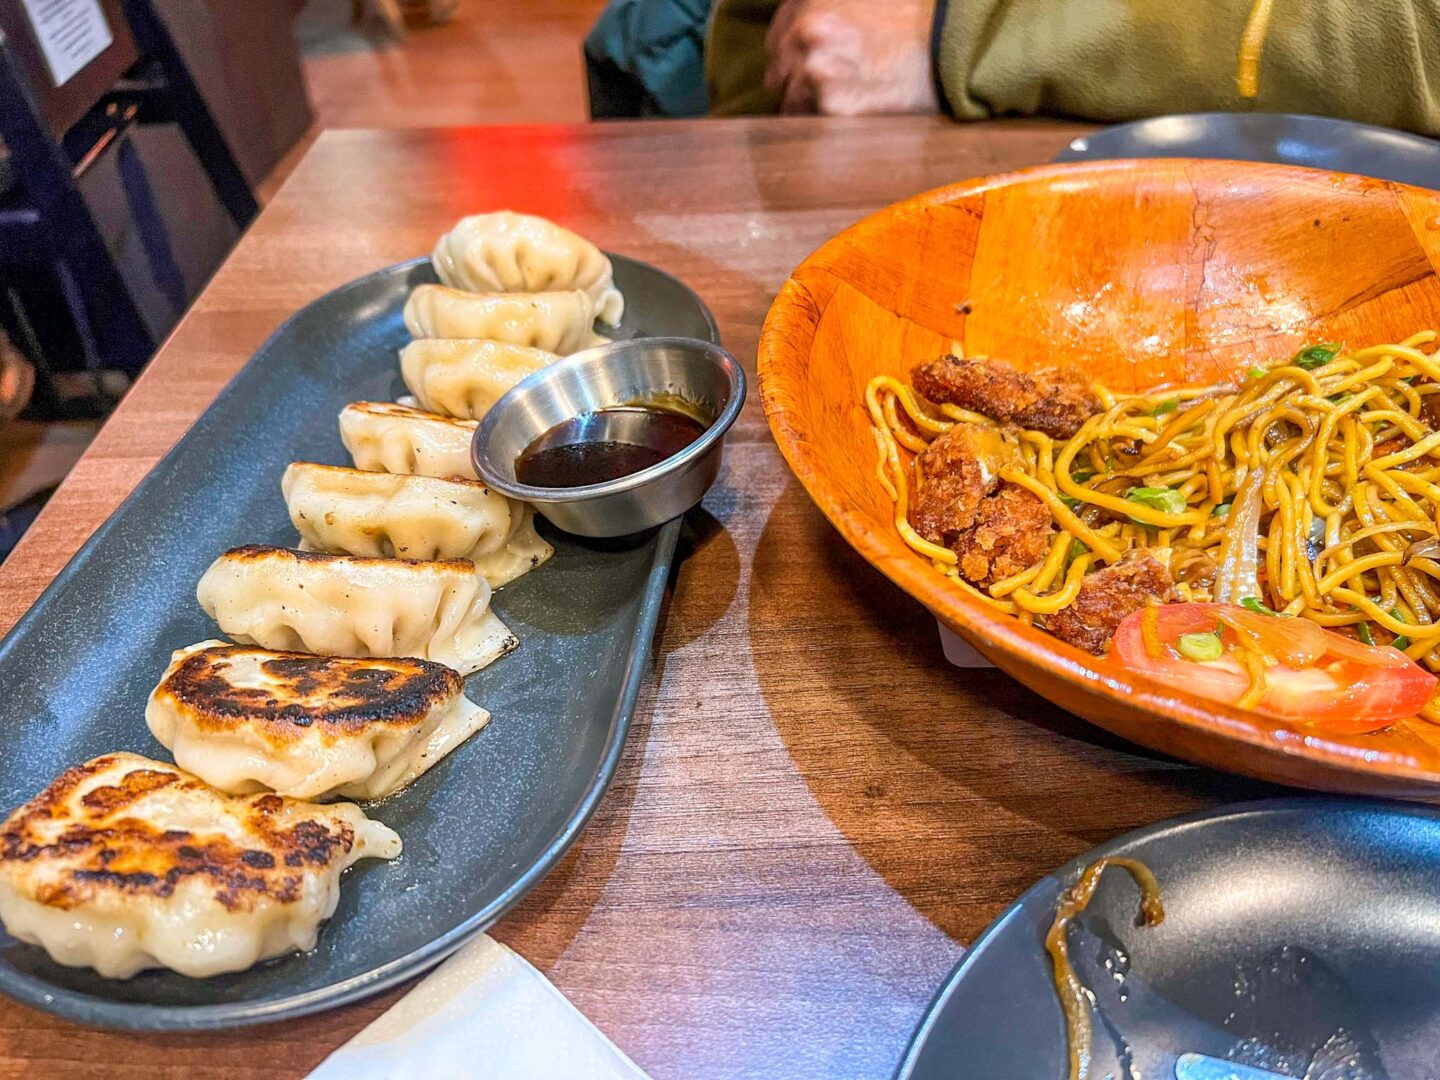 halal restaurants in manchester, dumplings and noodles at Gaijin Dumpling House